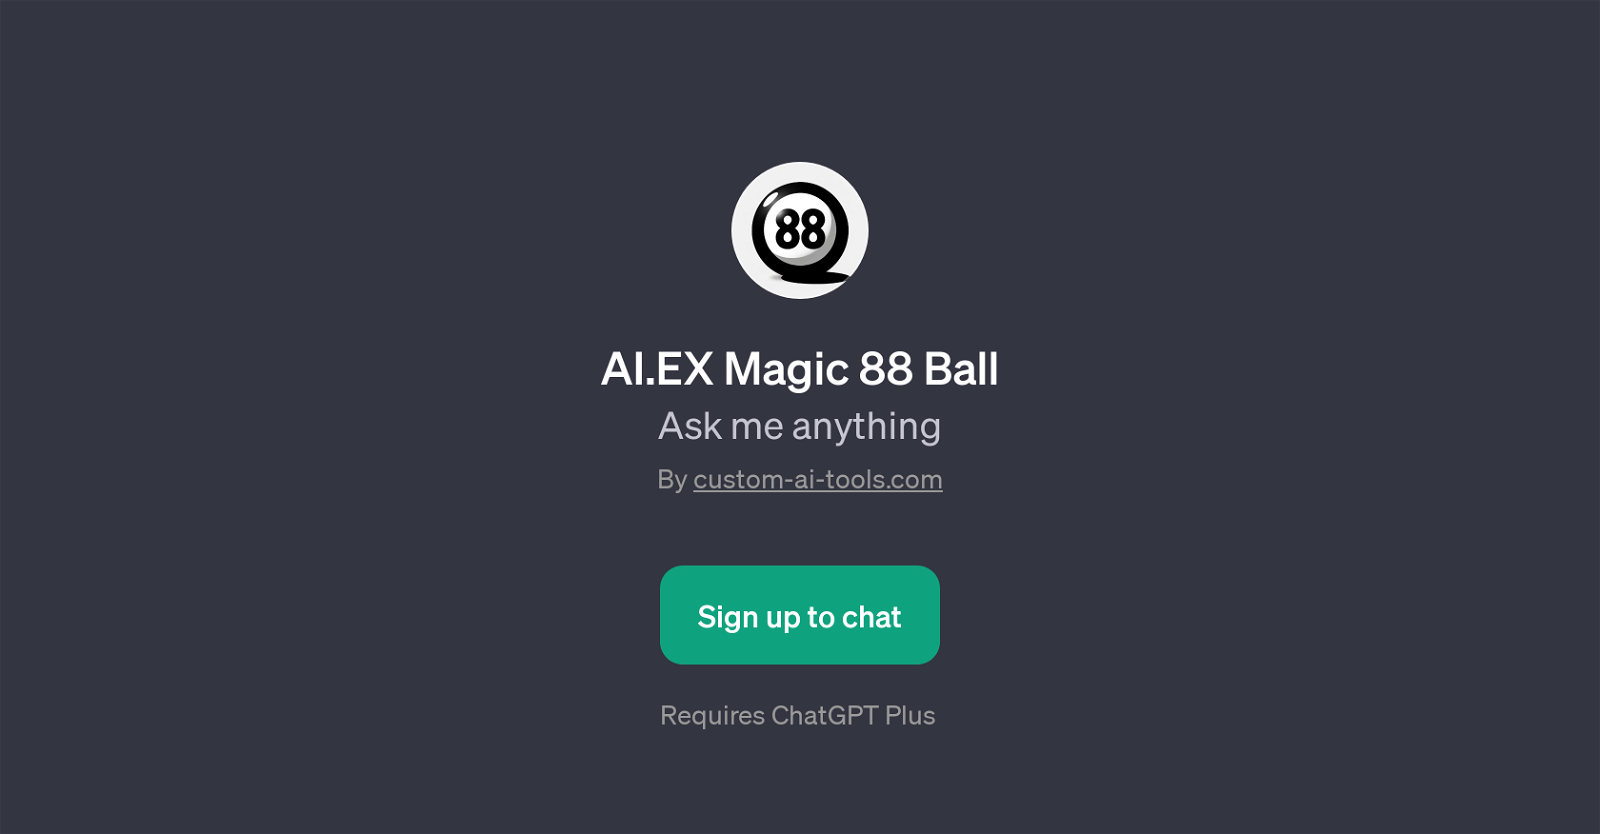 AI.EX Magic 88 Ball website